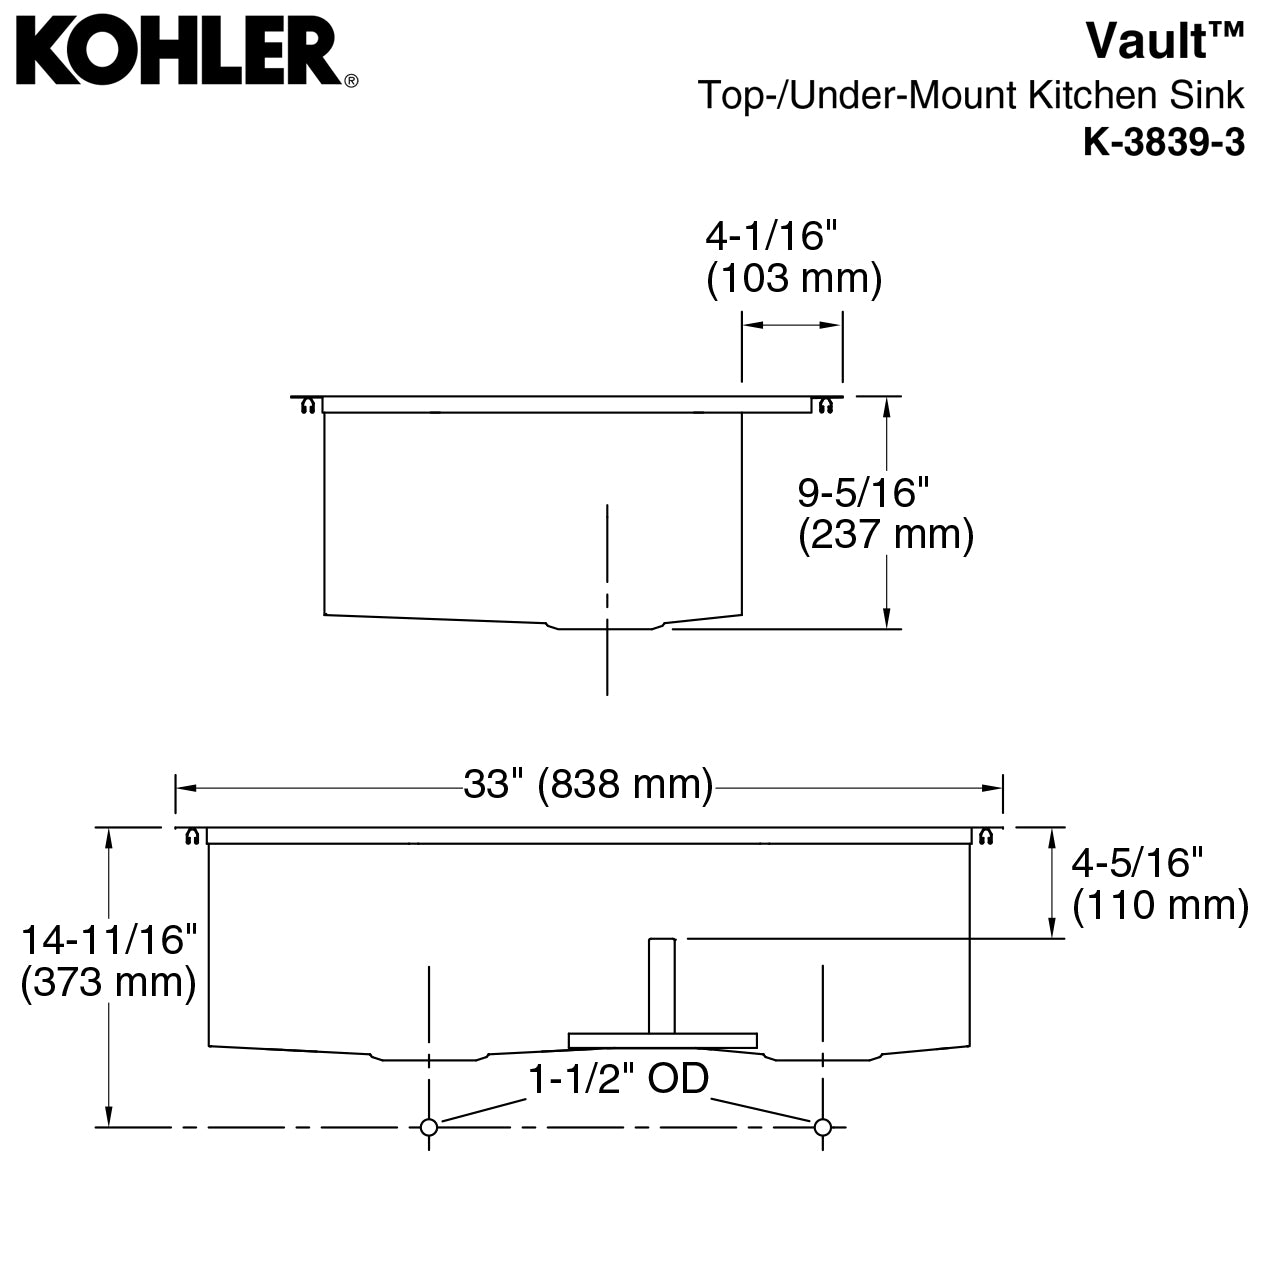 Kohler K-3839-3-NA - 33" x 22" Smart Divide Top Mount / Undermount Double Bowl Kitchen Sink, 3 Deck